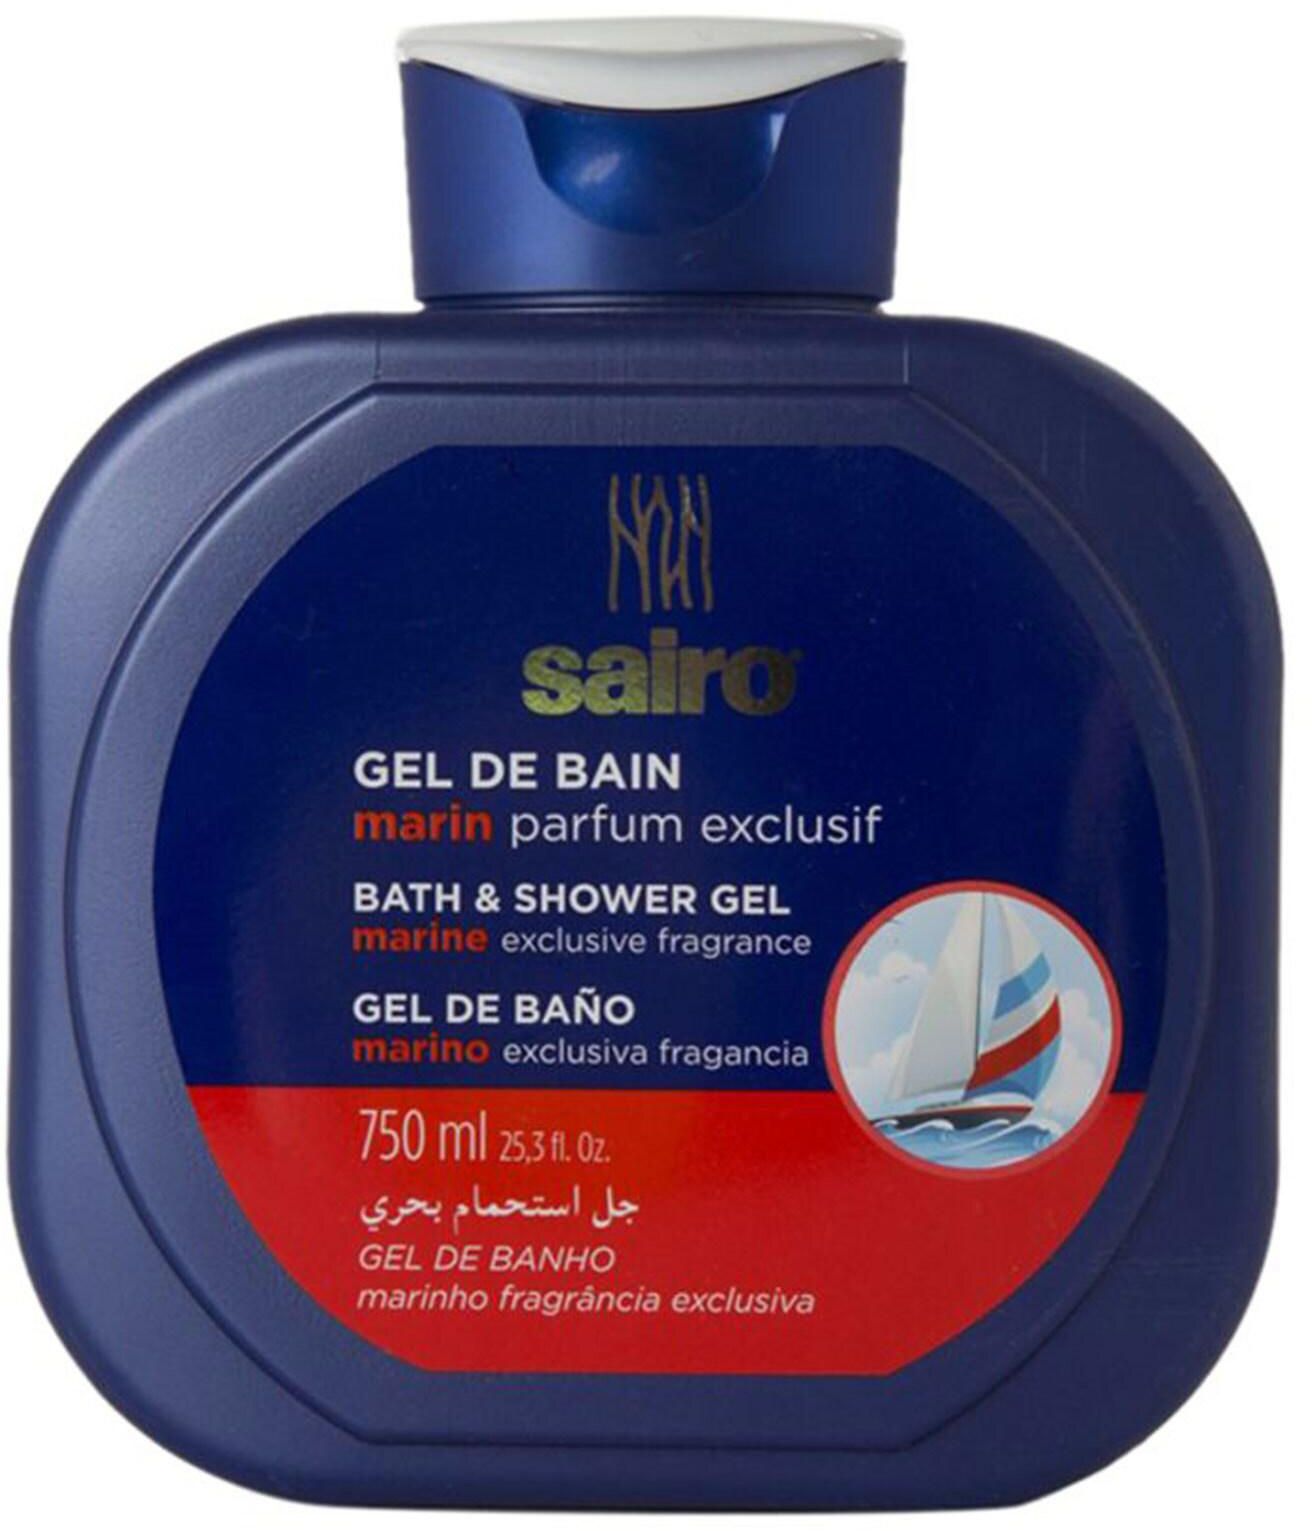 Sairo bath &amp; shower gel marine exclusive fragancia 750 ml